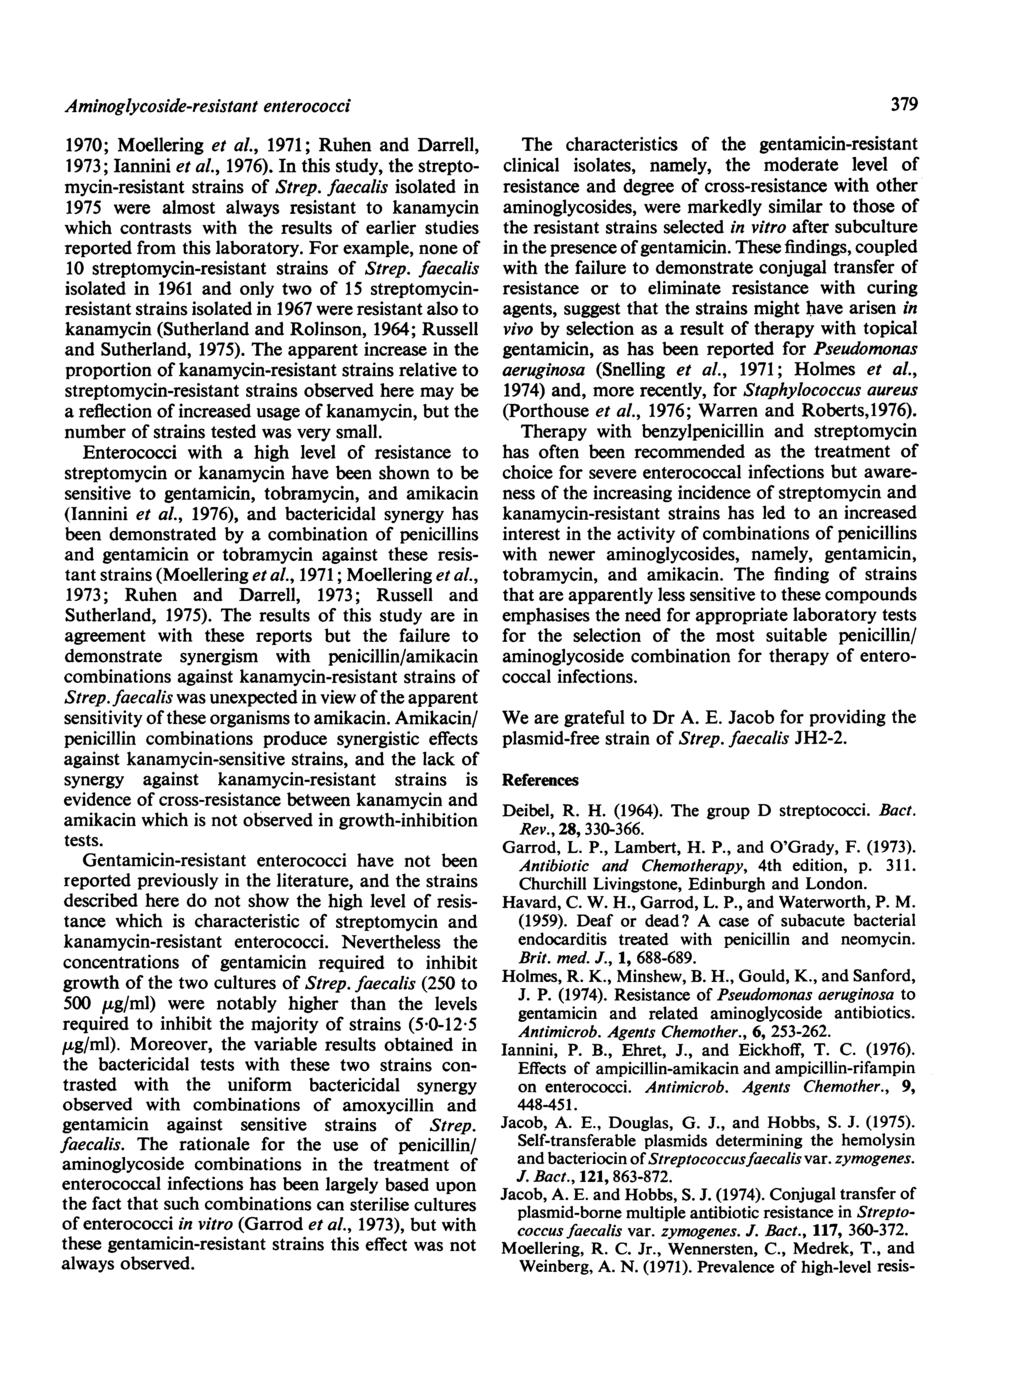 Aminoglycoside-resistant enterococci 1970; Moellering et al., 1971; Ruhen and Darrell, 1973; lannini et al., 1976). In this study, the streptomycin-resistant strains of Strep.